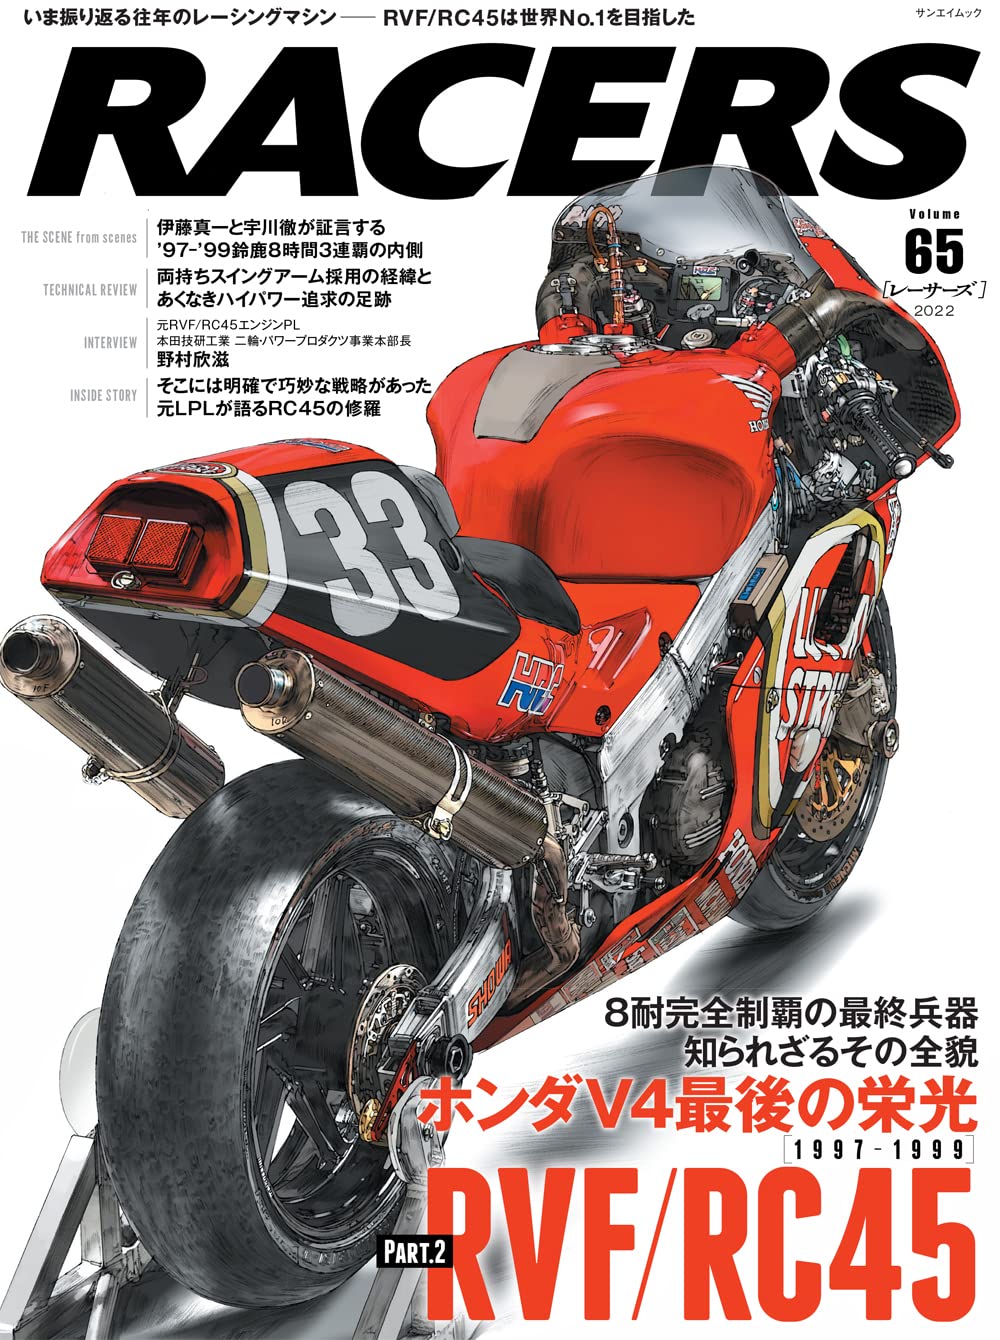 RACERS - レ-サ-ズ - Vol.65 RVF/RC45 ホンダV4最後の榮光 (サンエイムック)